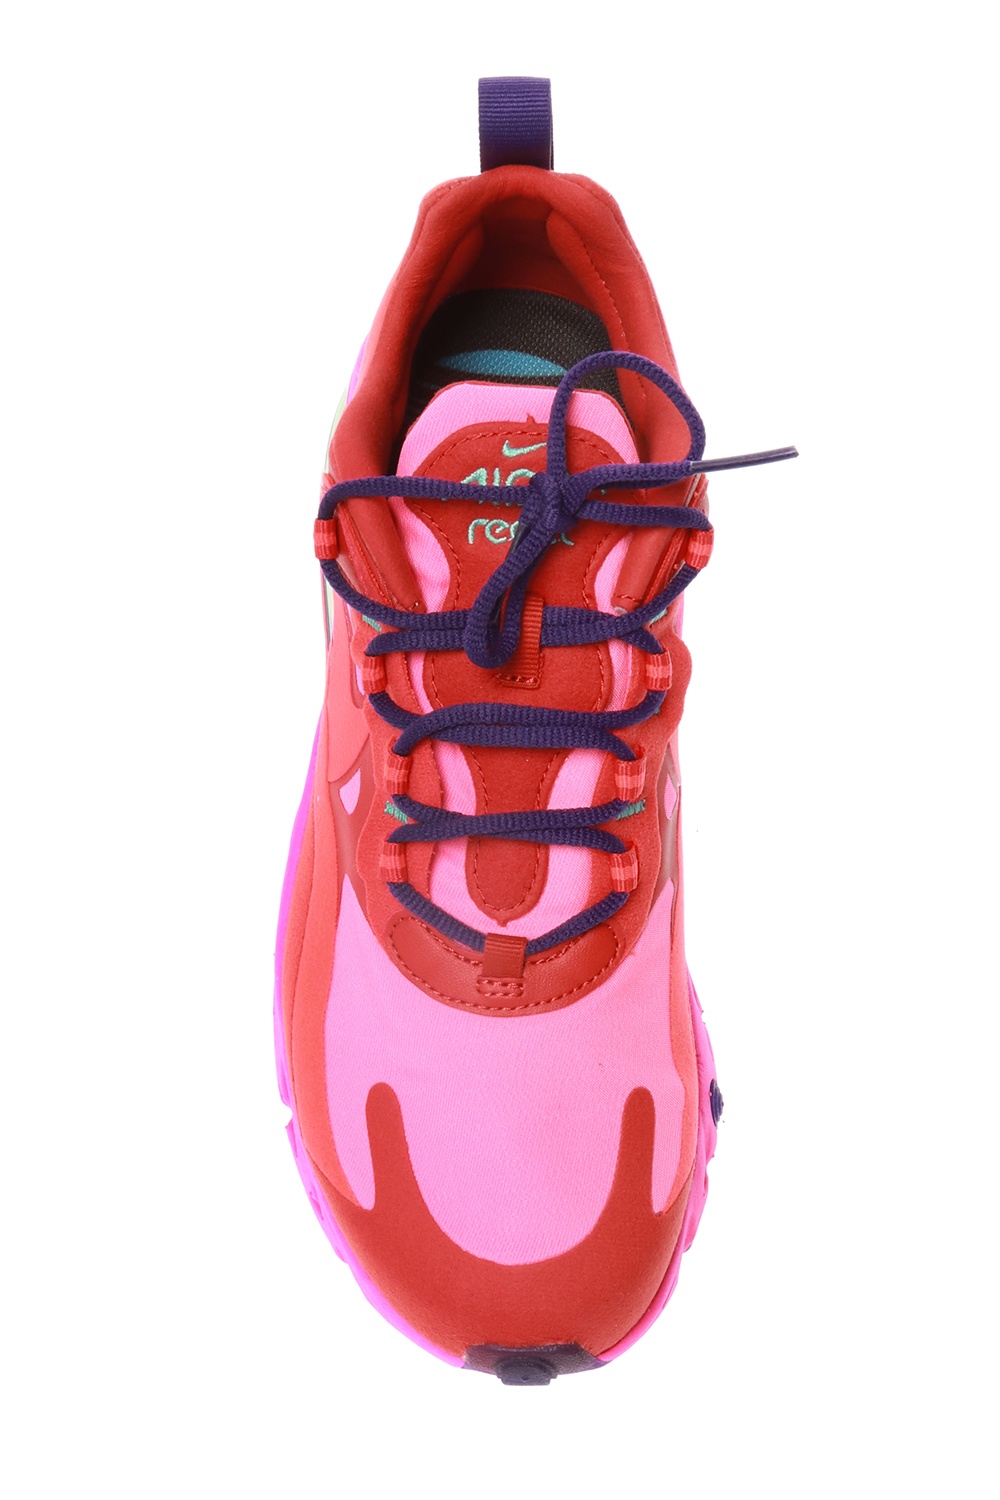 Nike Air Max 270 React Mystic Red (Women's) - AT6174-600 - US